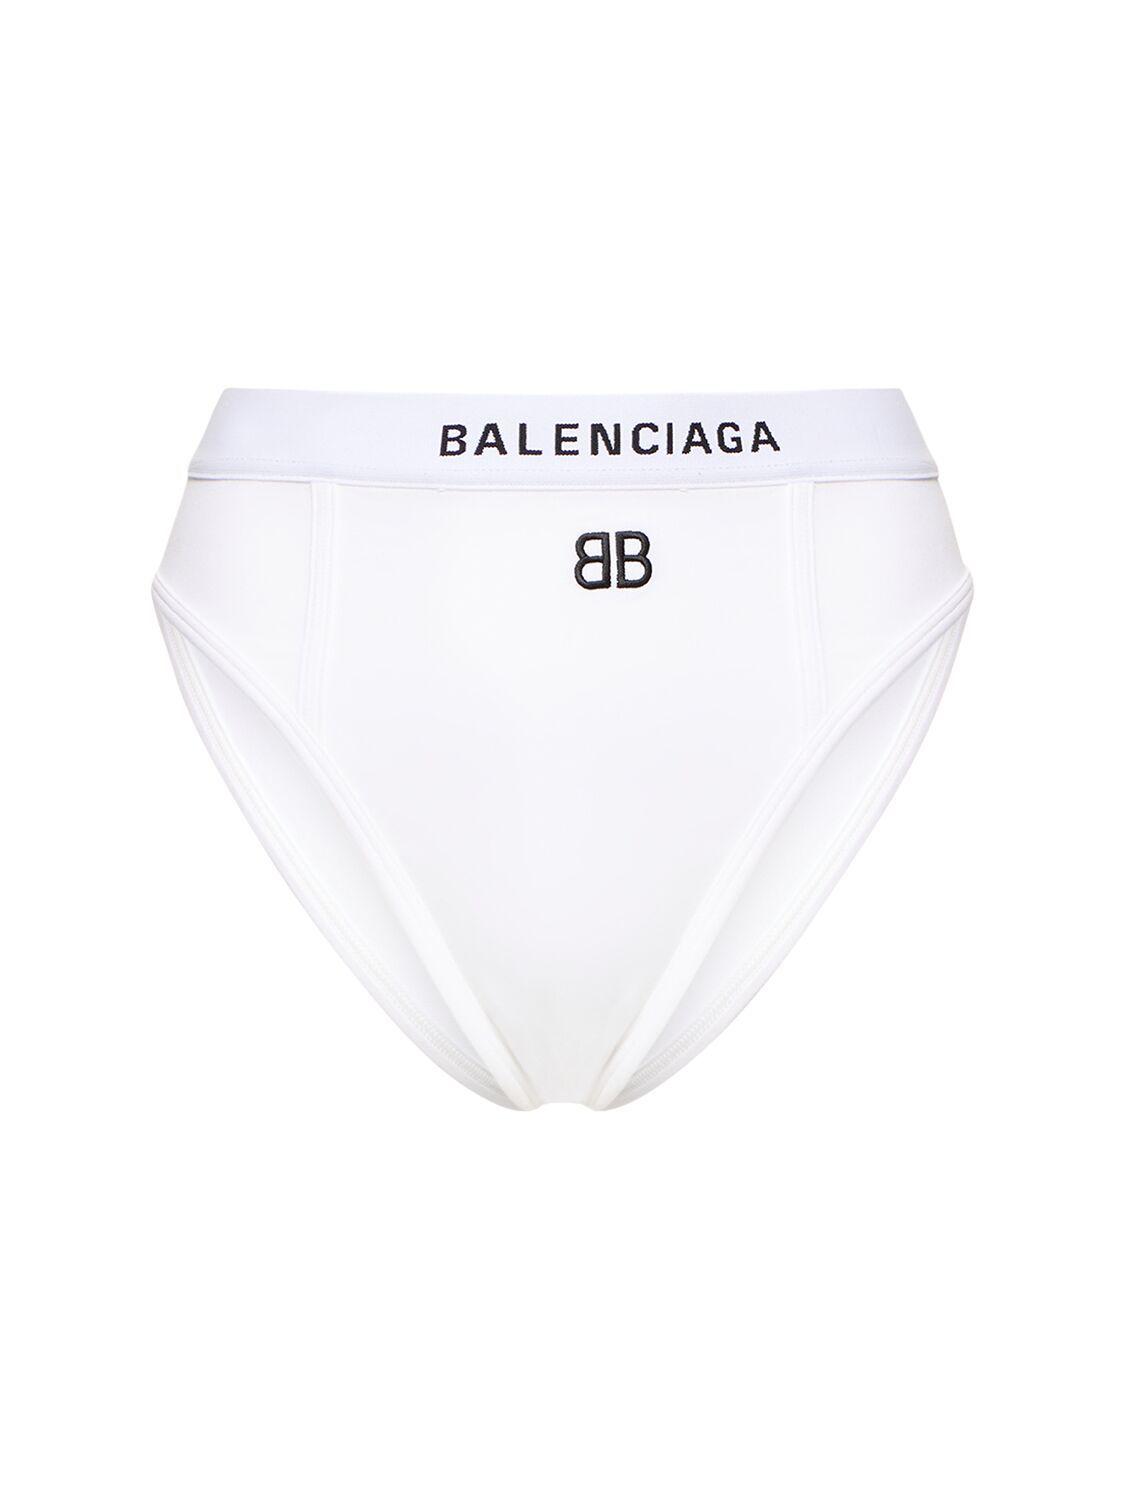 Balenciaga Cotton Jersey Sports Briefs in White | Lyst